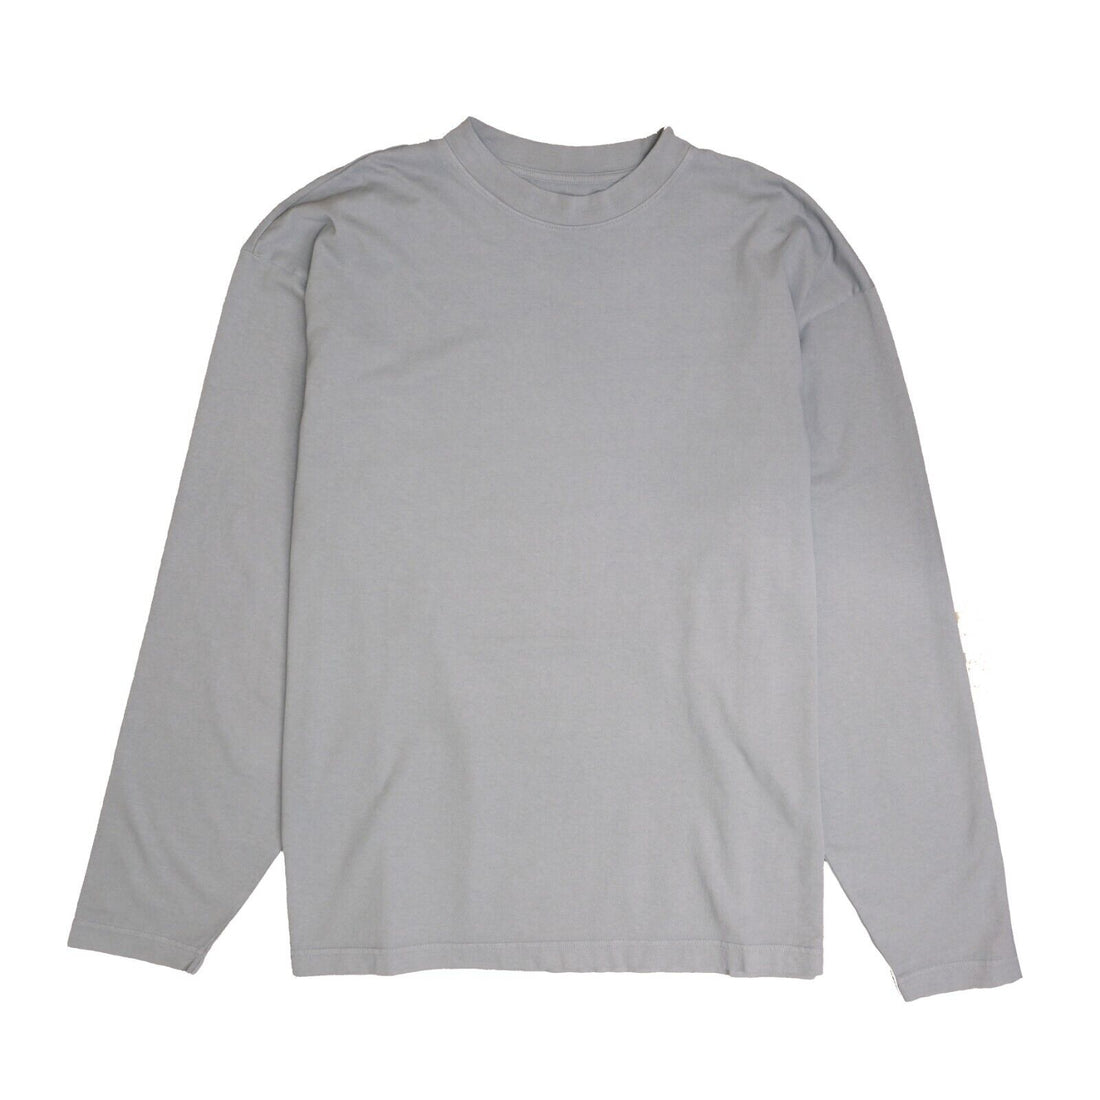 Yeezy Gap Unreleased Long Sleeve T-Shirt Size 2XL Gray